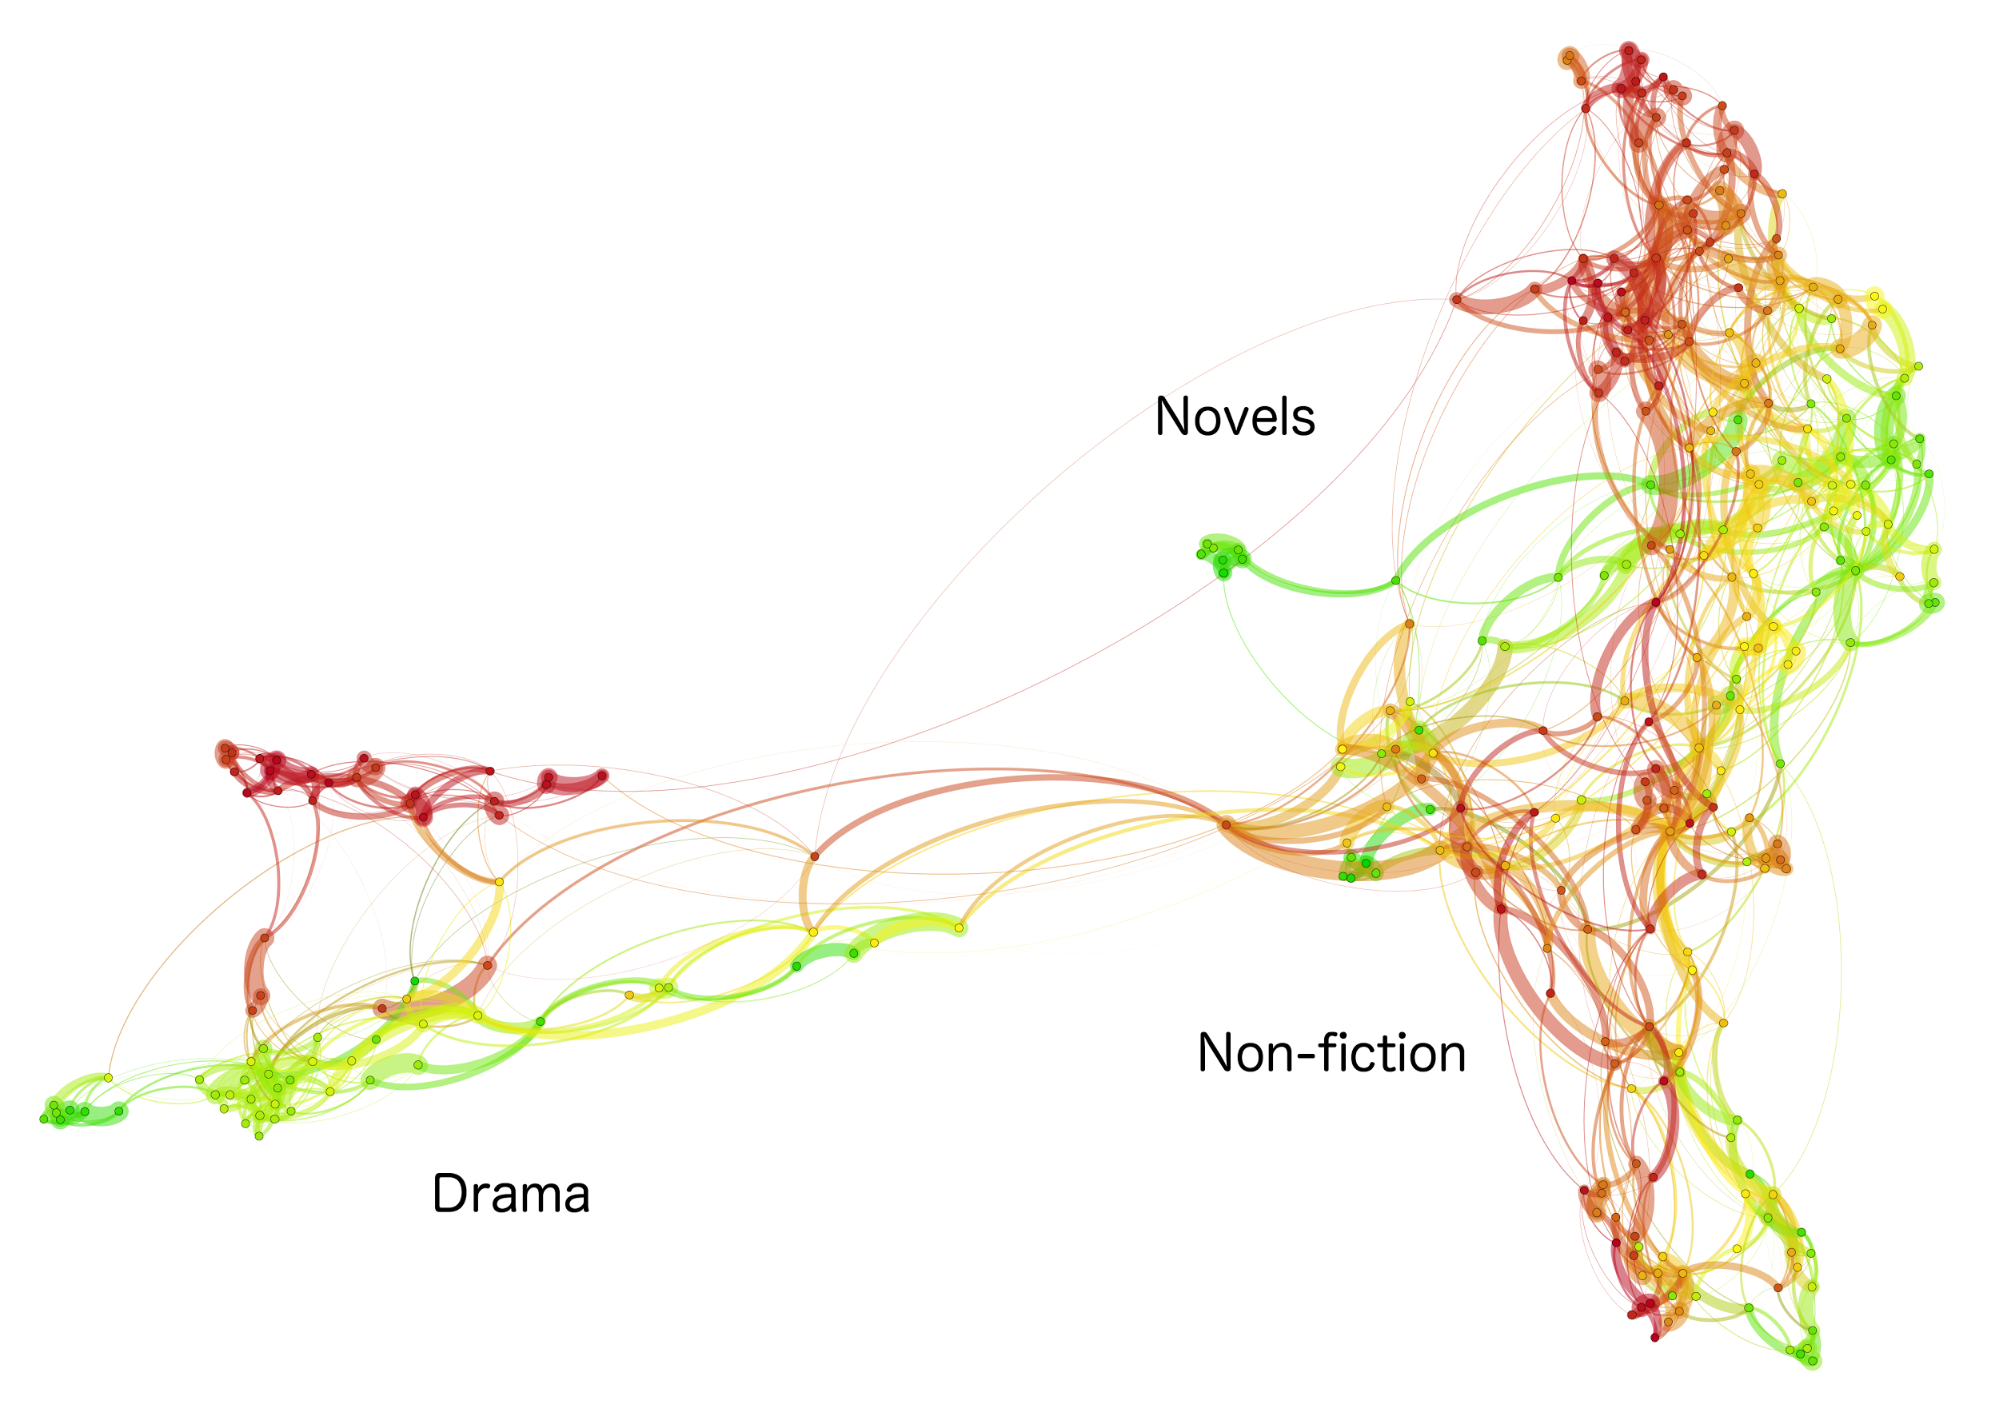 Figure 1: Stylometric network of similarities between 333 English texts